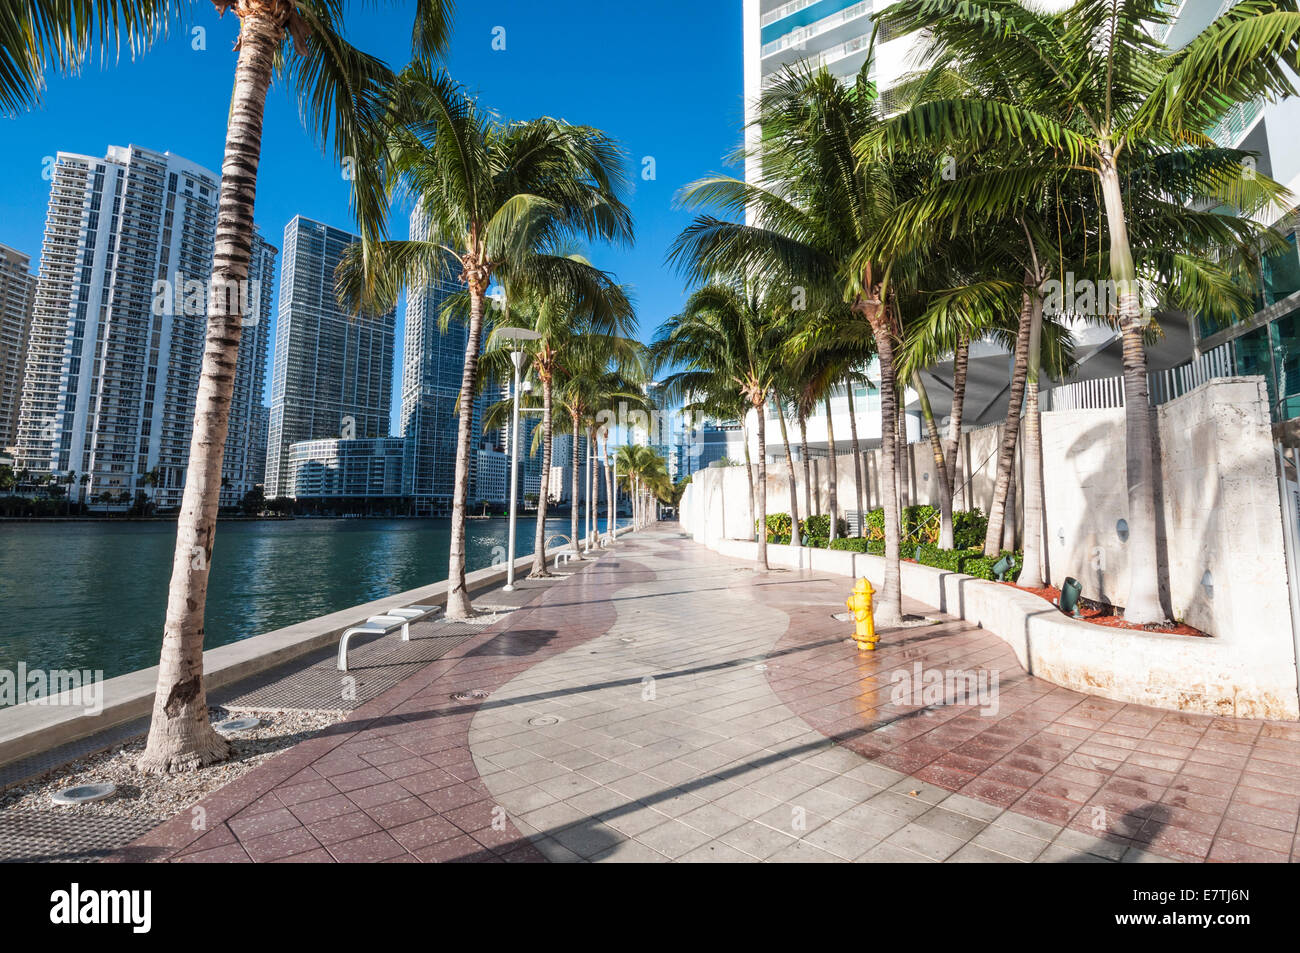 Waterfront promenade with palm trees in Miami, Florida, USA Stock Photo